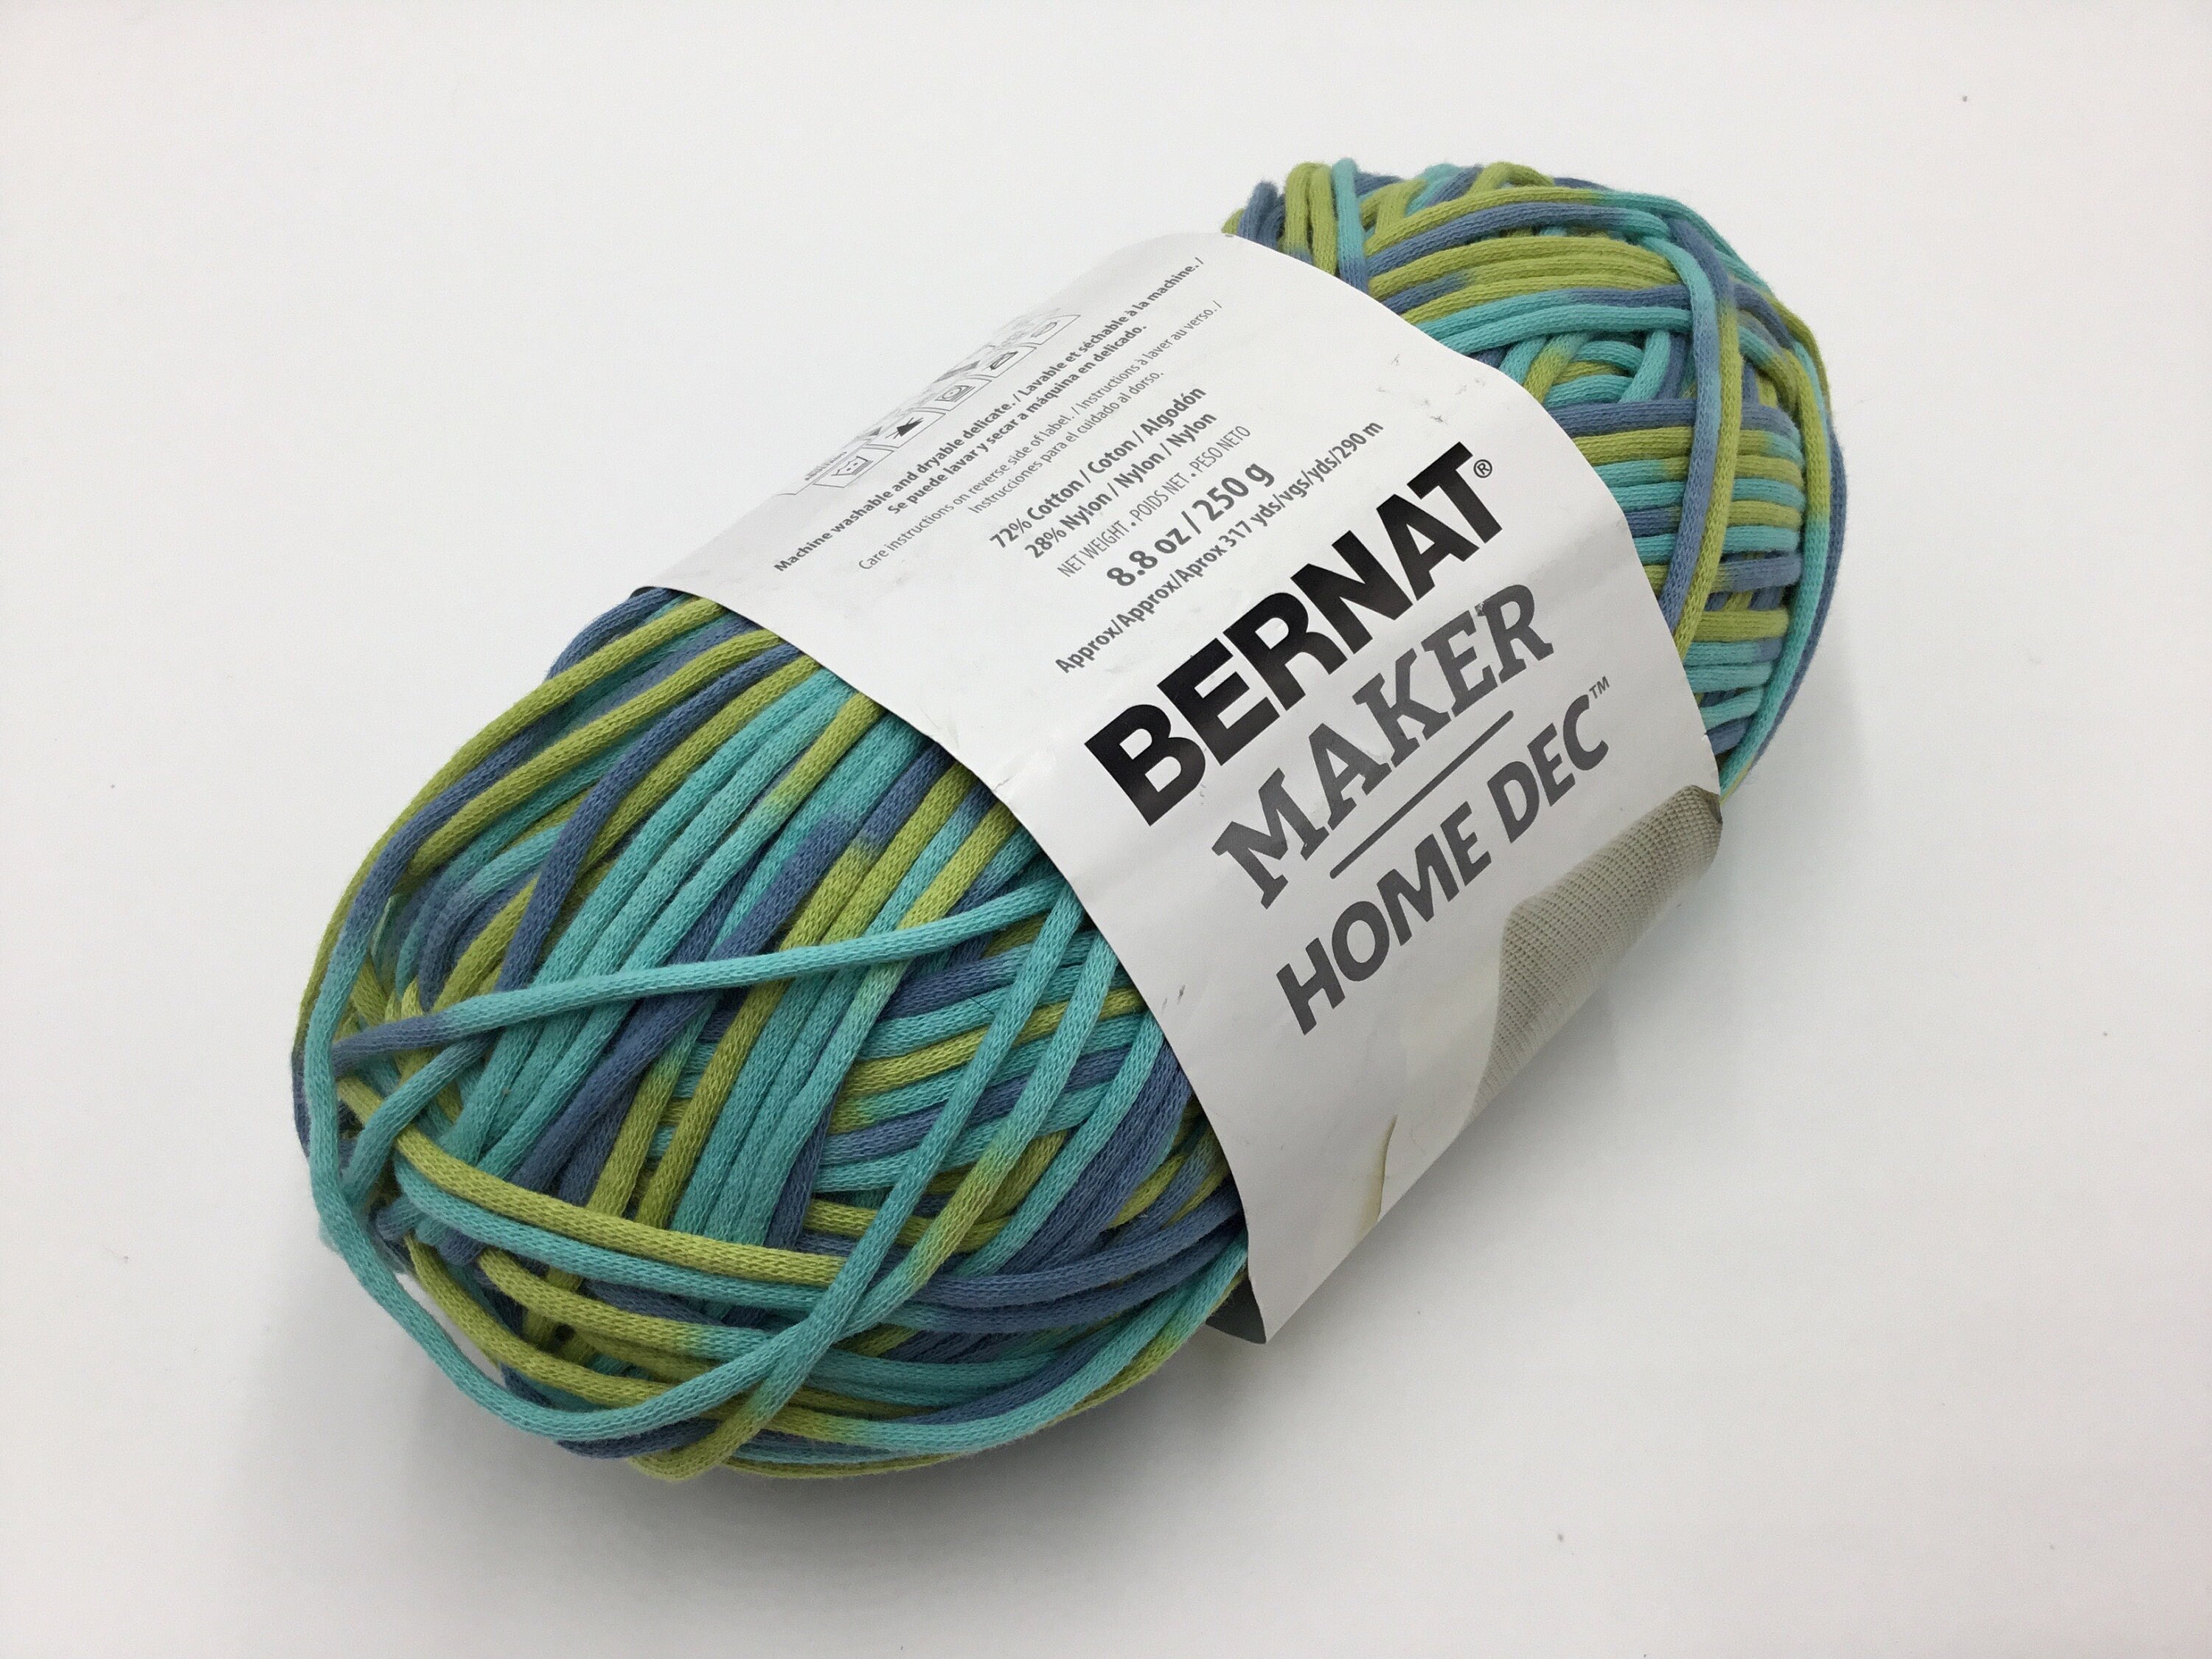 Bernat Maker Home Dec Steel Blue Yarn - 2 Pack of 250g/8.8oz - Cotton - 5  Bulky - 317 Yards - Knitting/Crochet